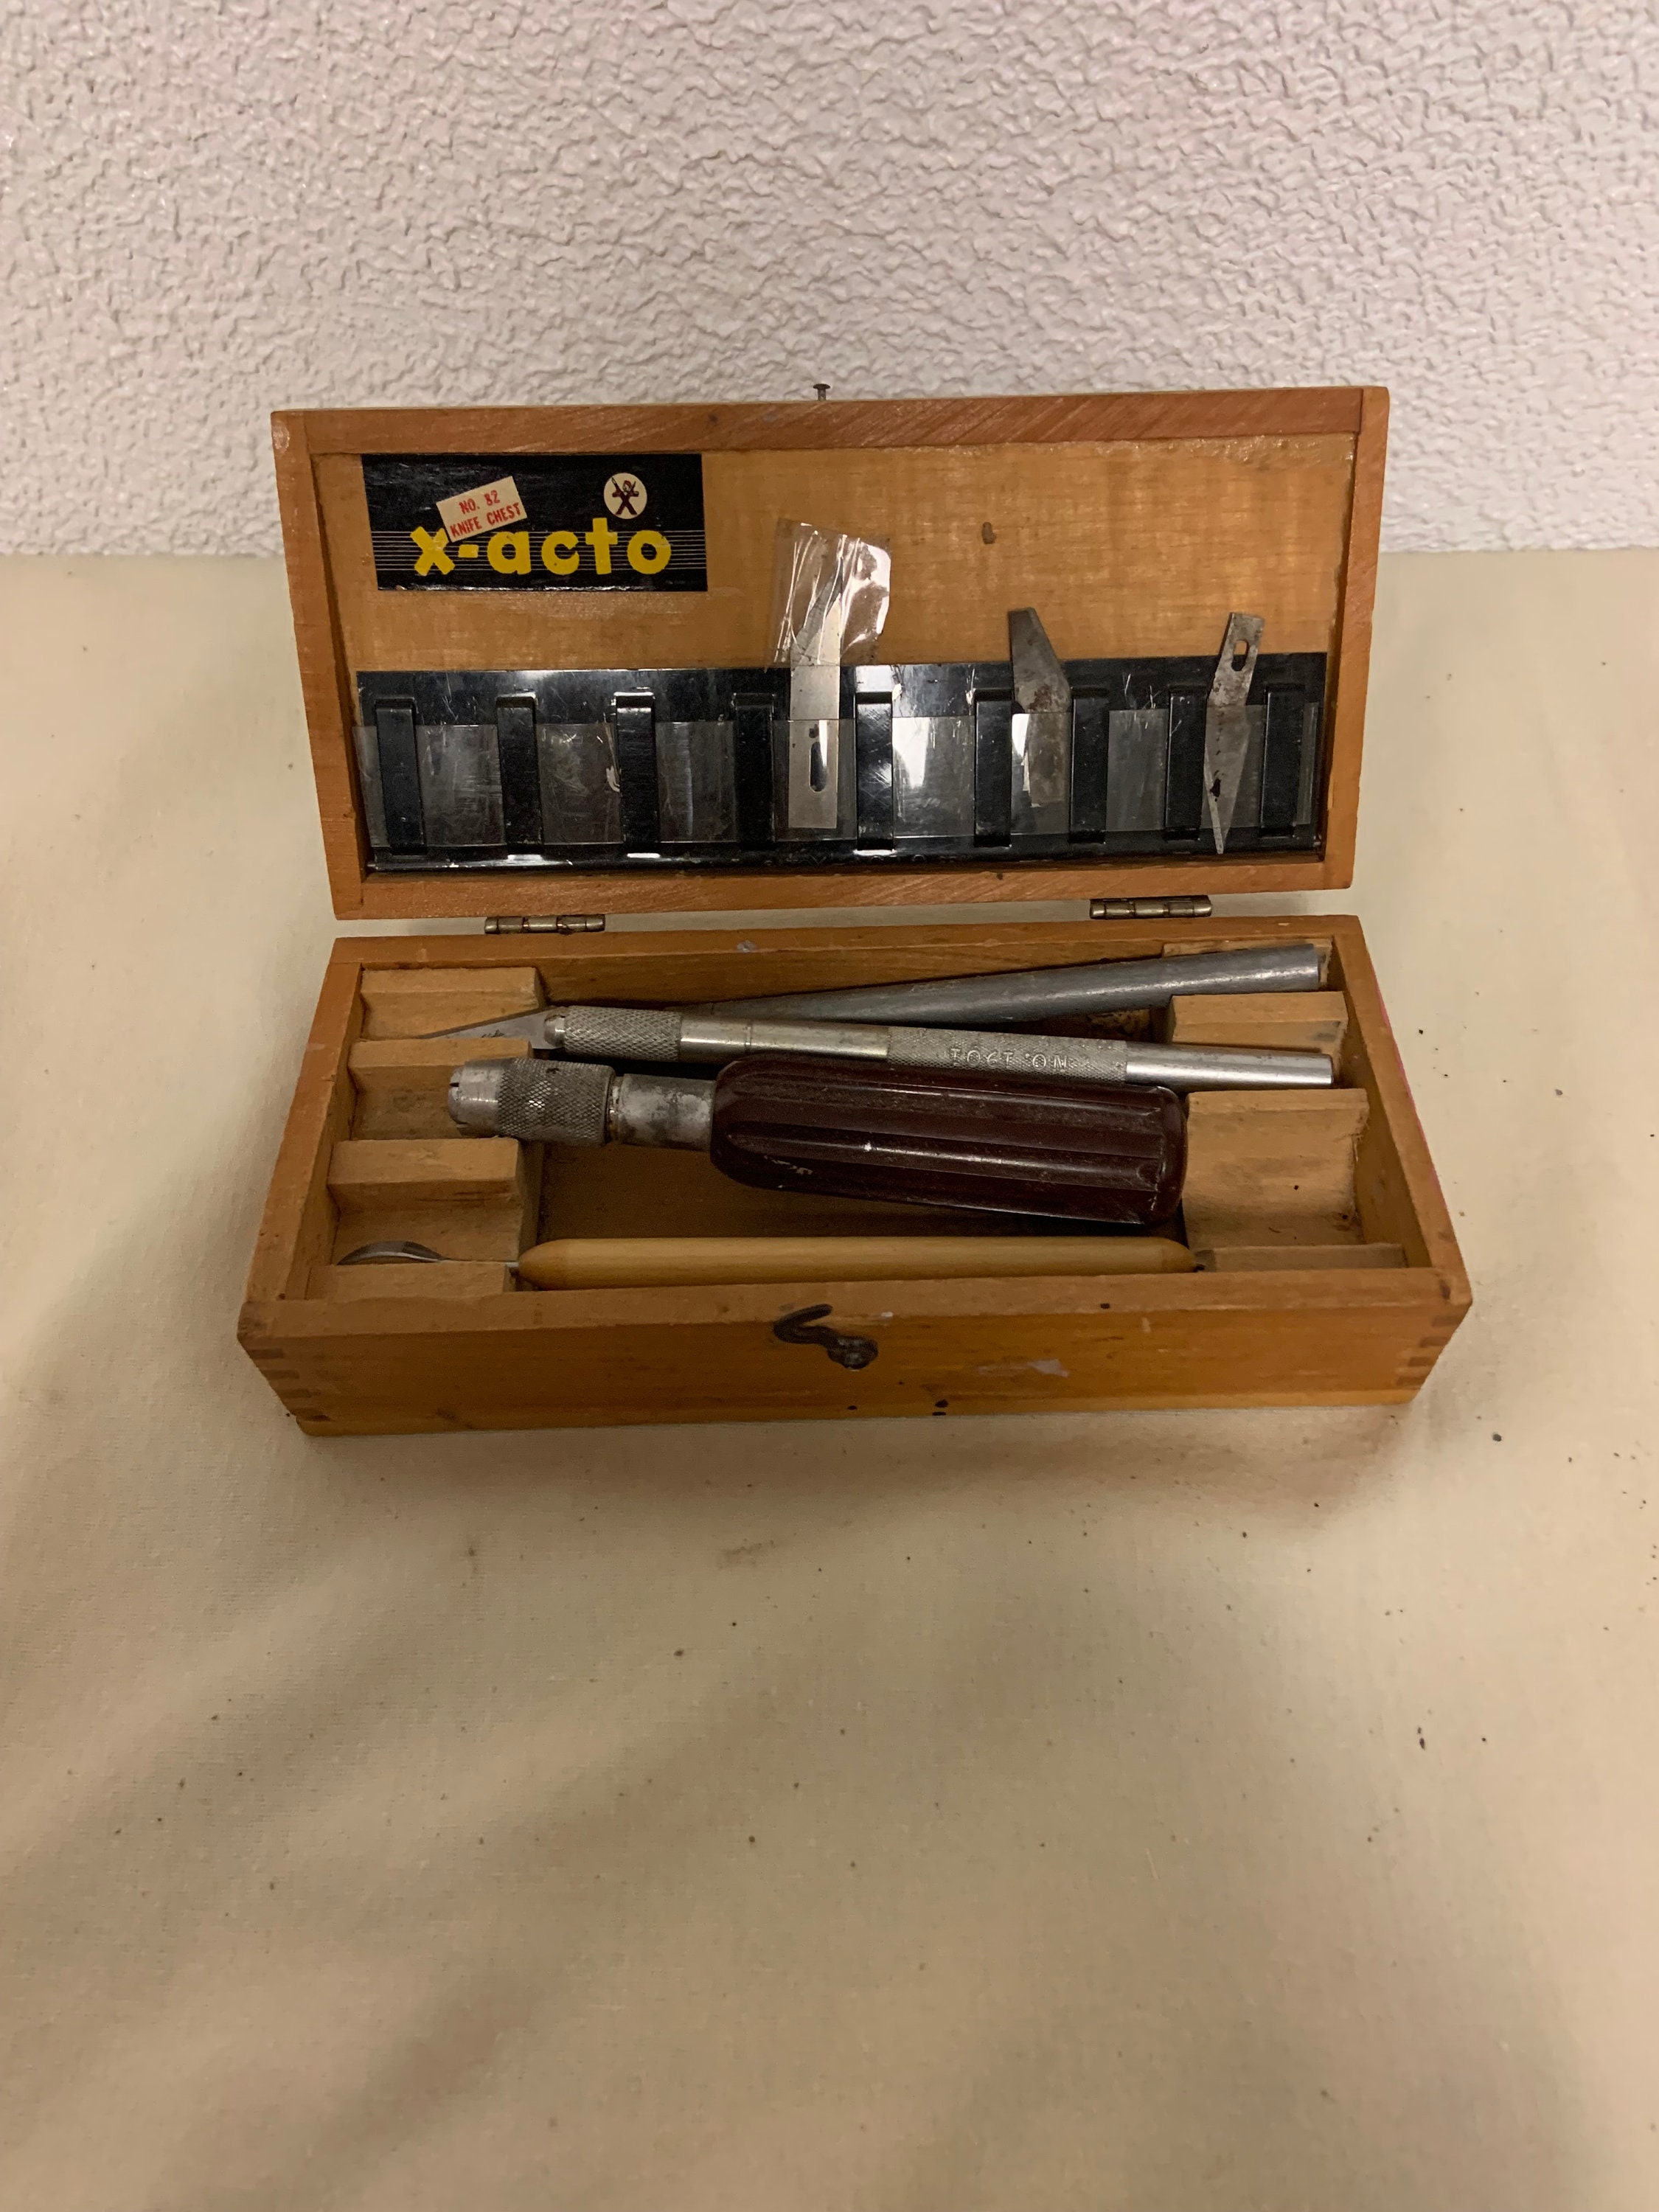 X-ACTO Knife Set Vintage 